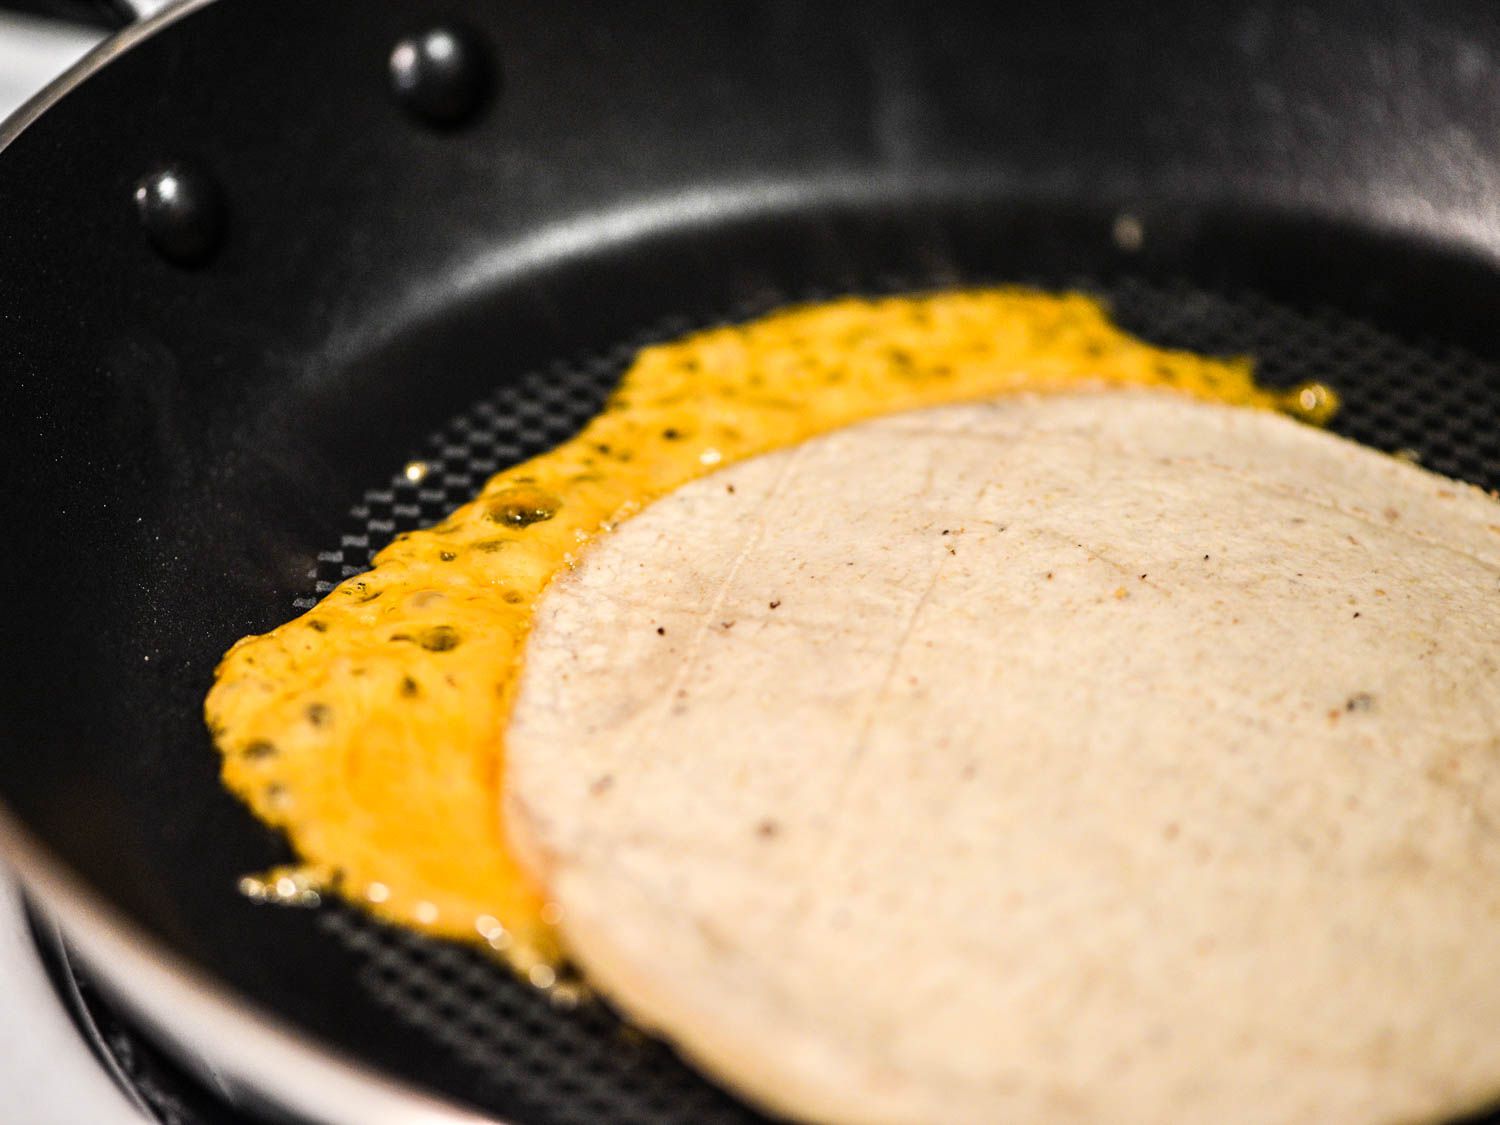 20150422-crispy-cheese-tacos-tortilla-on-cheese-joshua-bousel.jpg